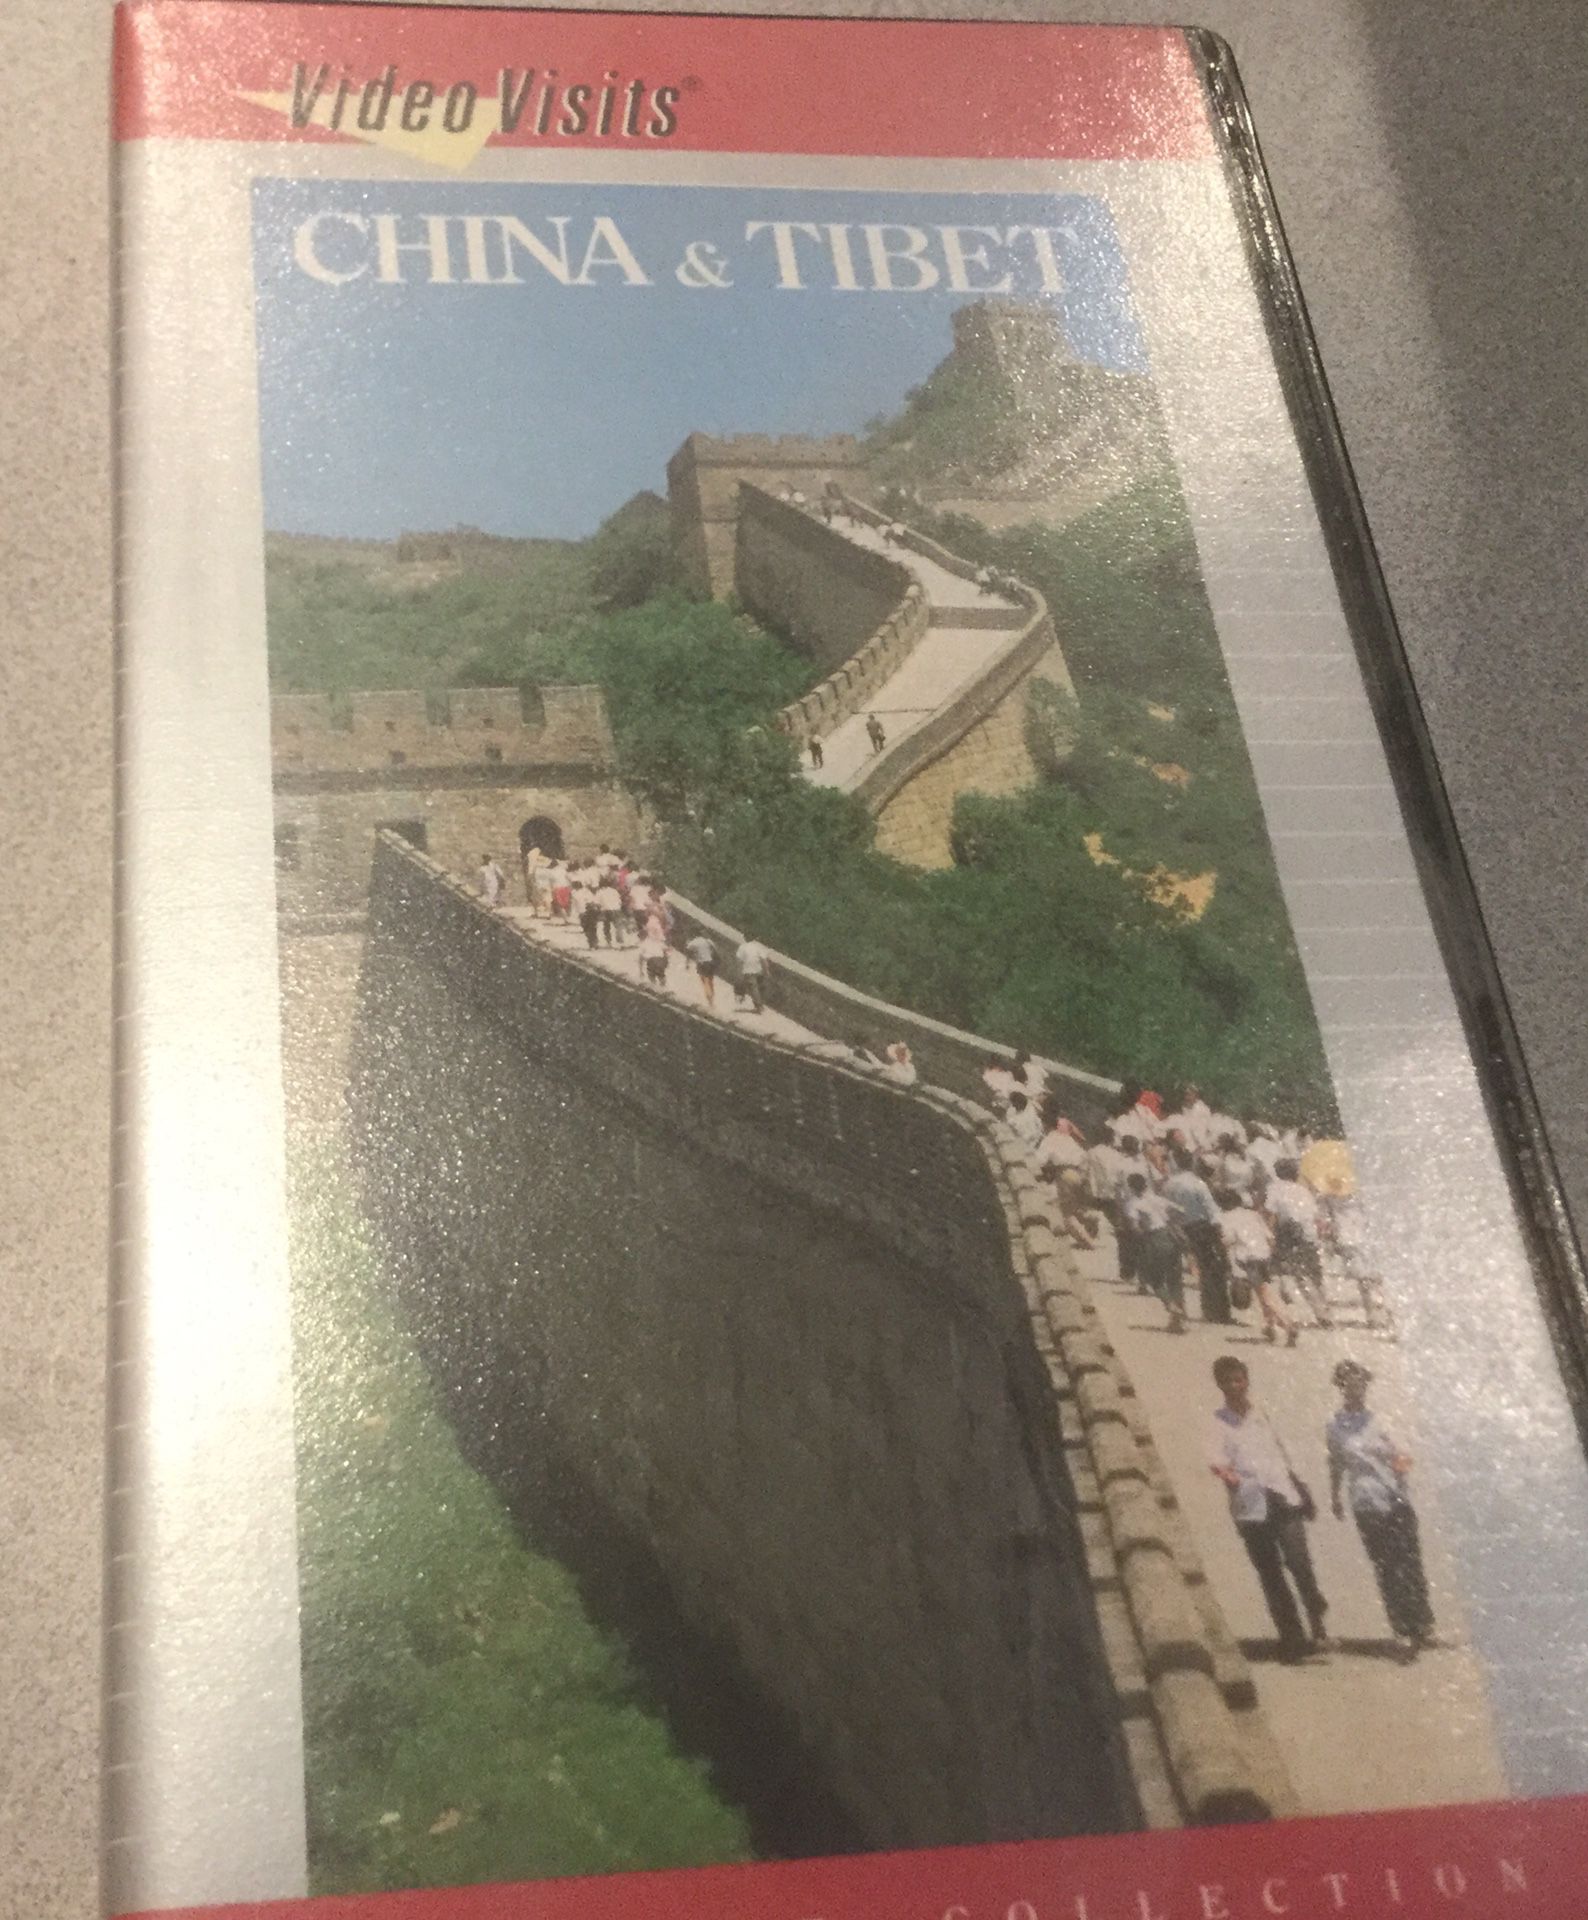 Video Visits China & Tibet Movie VHS TAPE